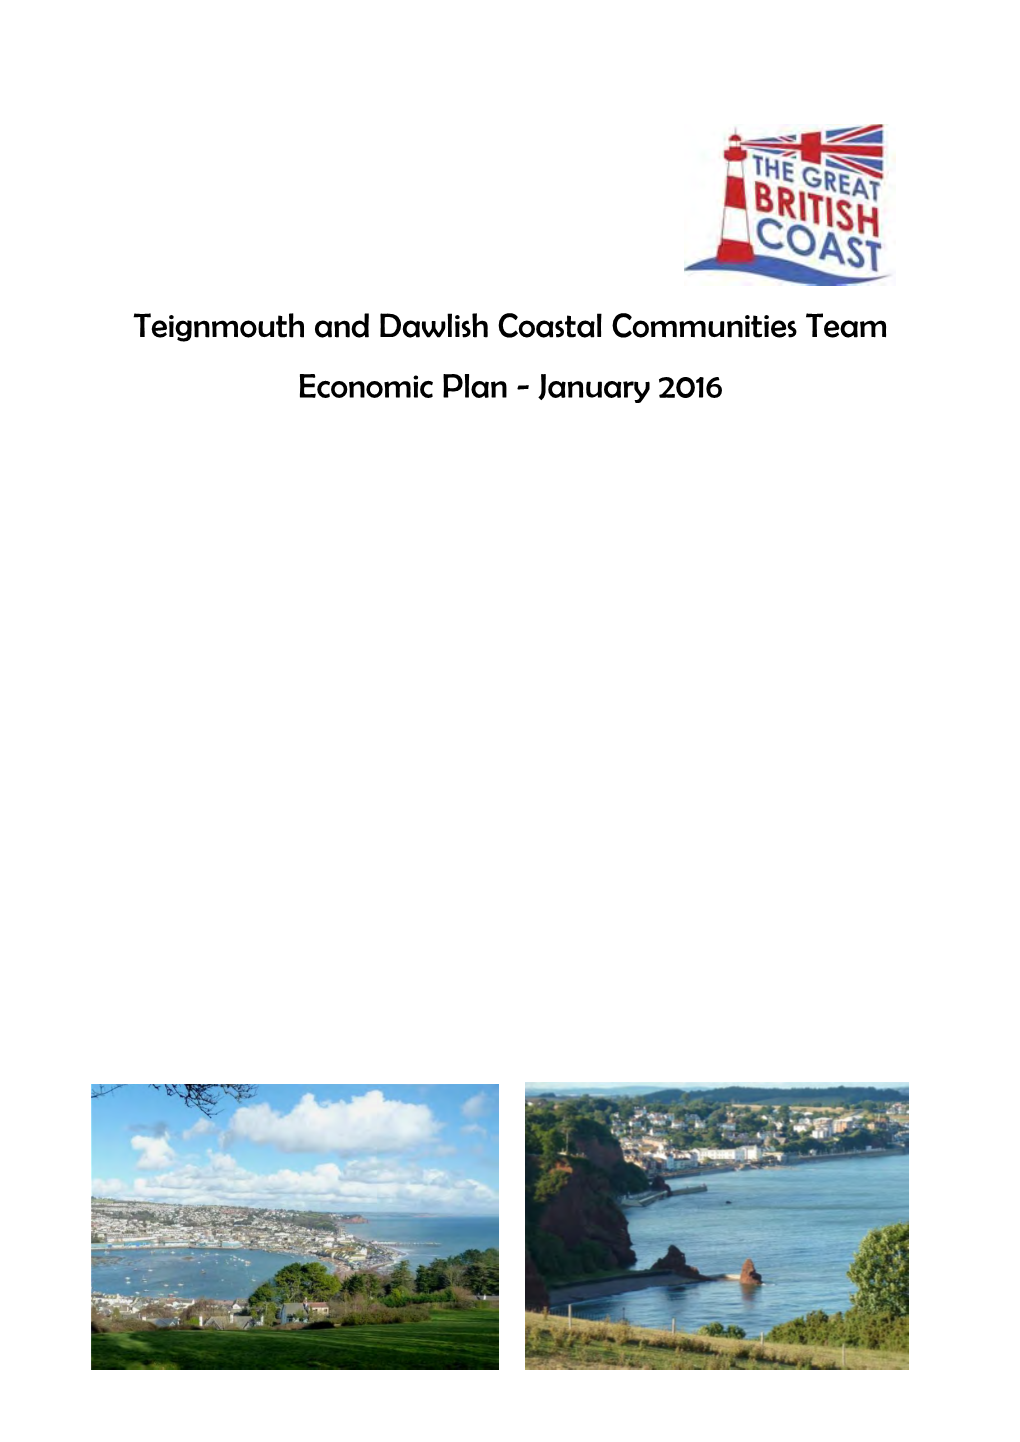 Teignmouth and Dawlish Coastal Communities Team Economic Plan - January 2016